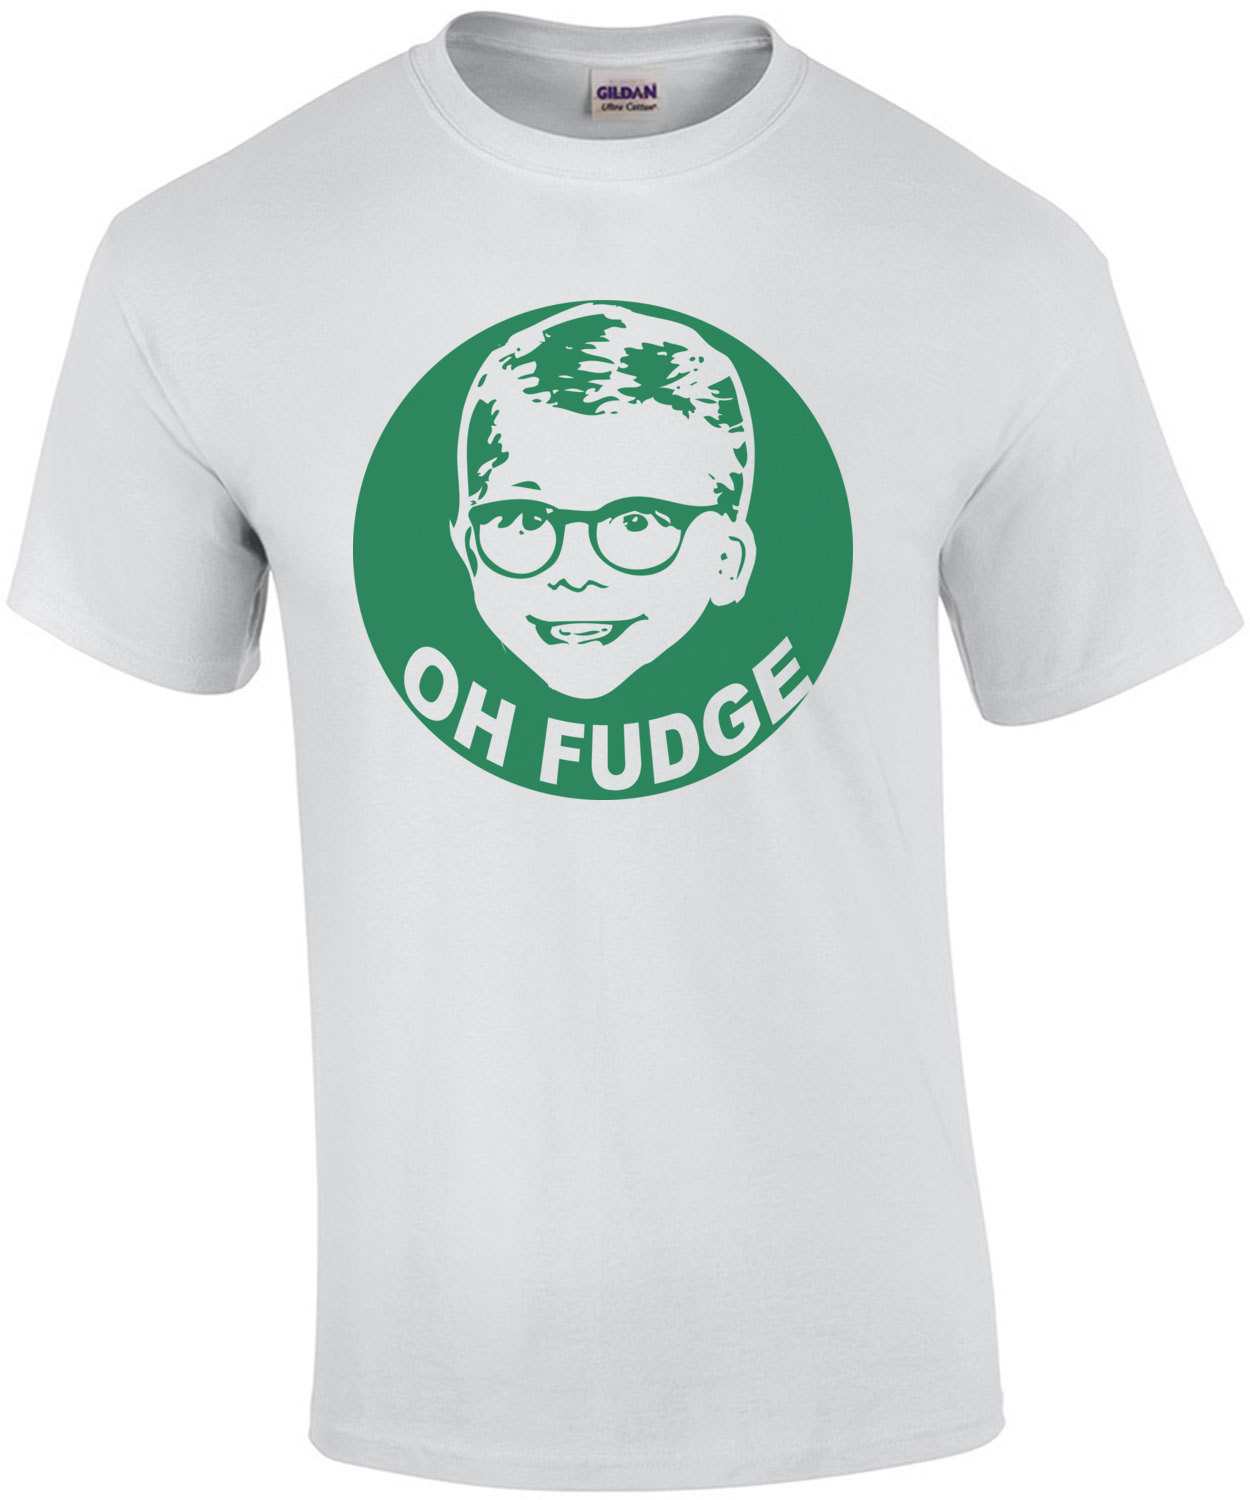 Oh Fudge - A Christmas Story Kids Shirt